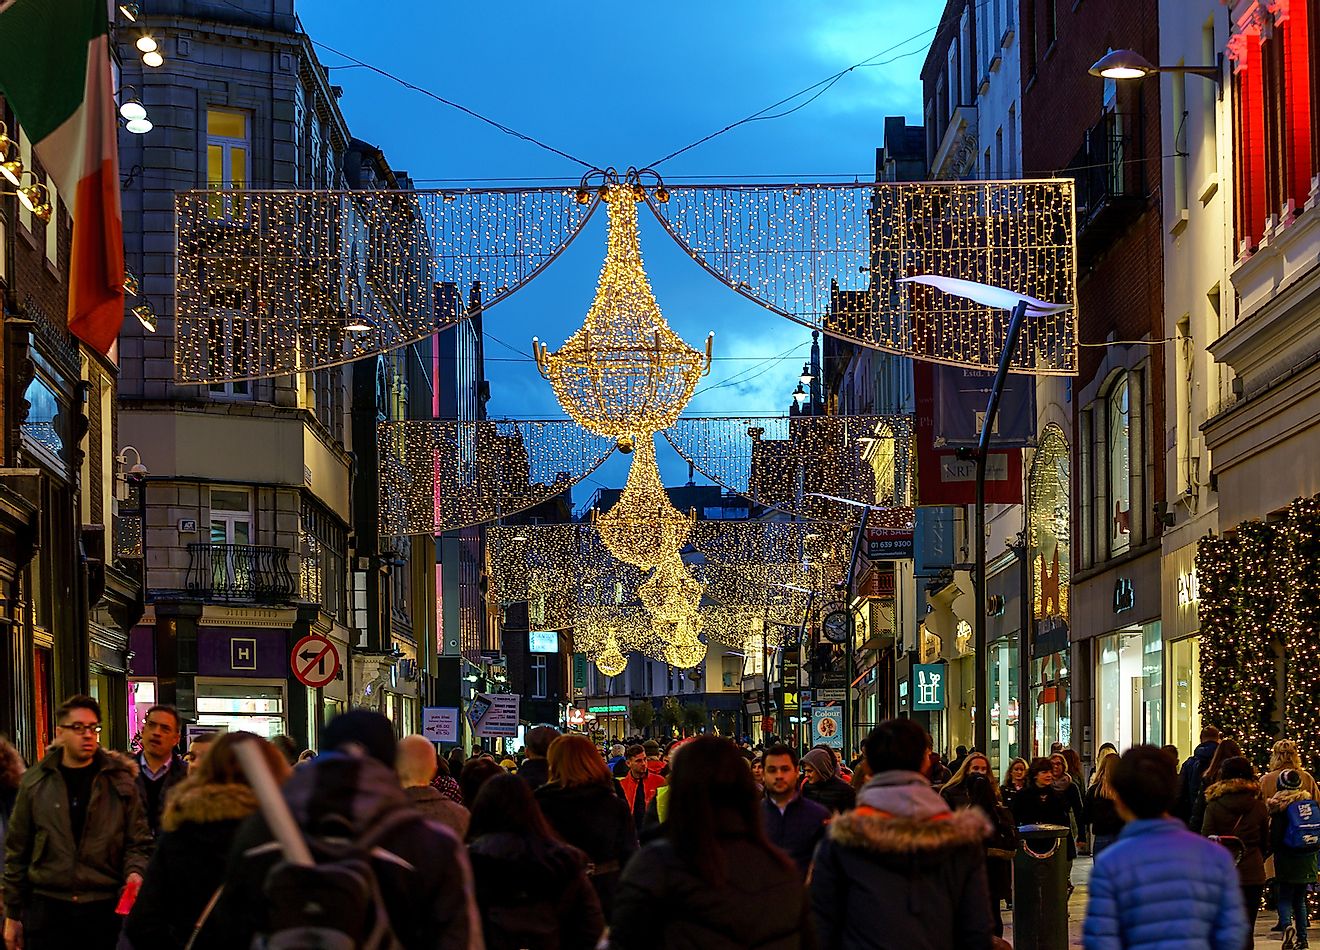 Christmas lights in Grafton street, Dublin, Ireland. Image credit: Abd/Shutterstock.com